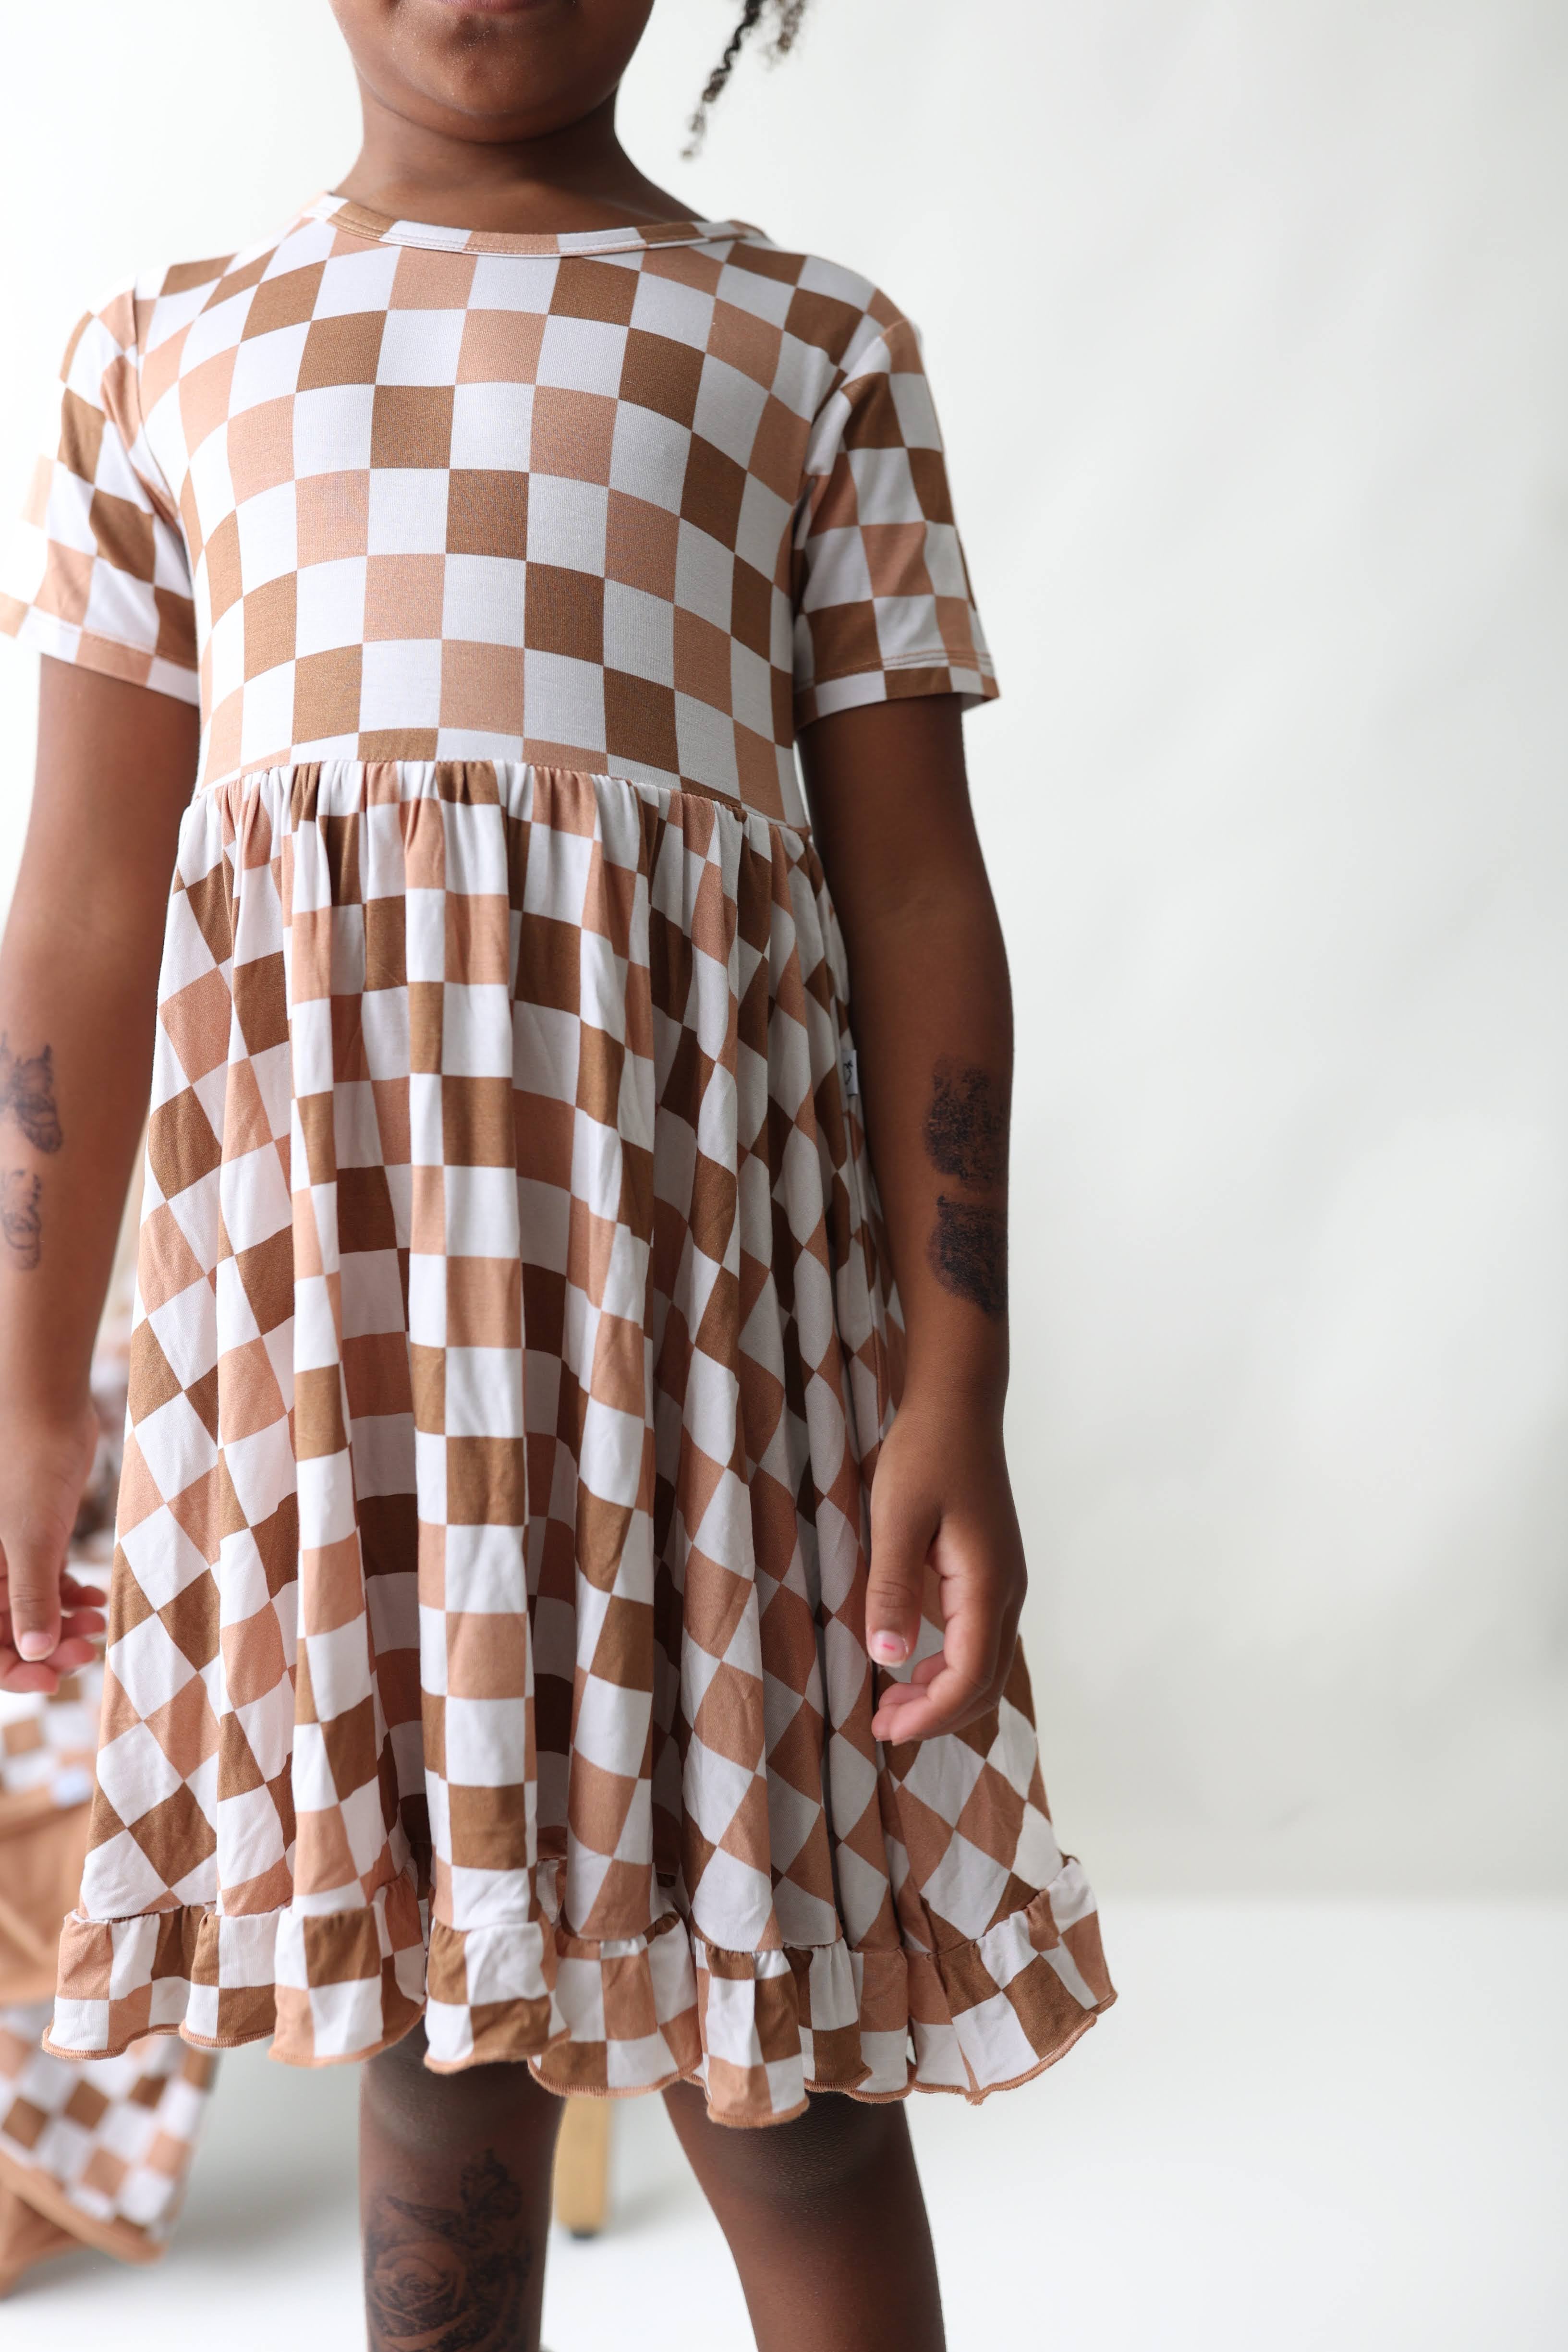 Chestnut Checkers Dream Ruffle Dress